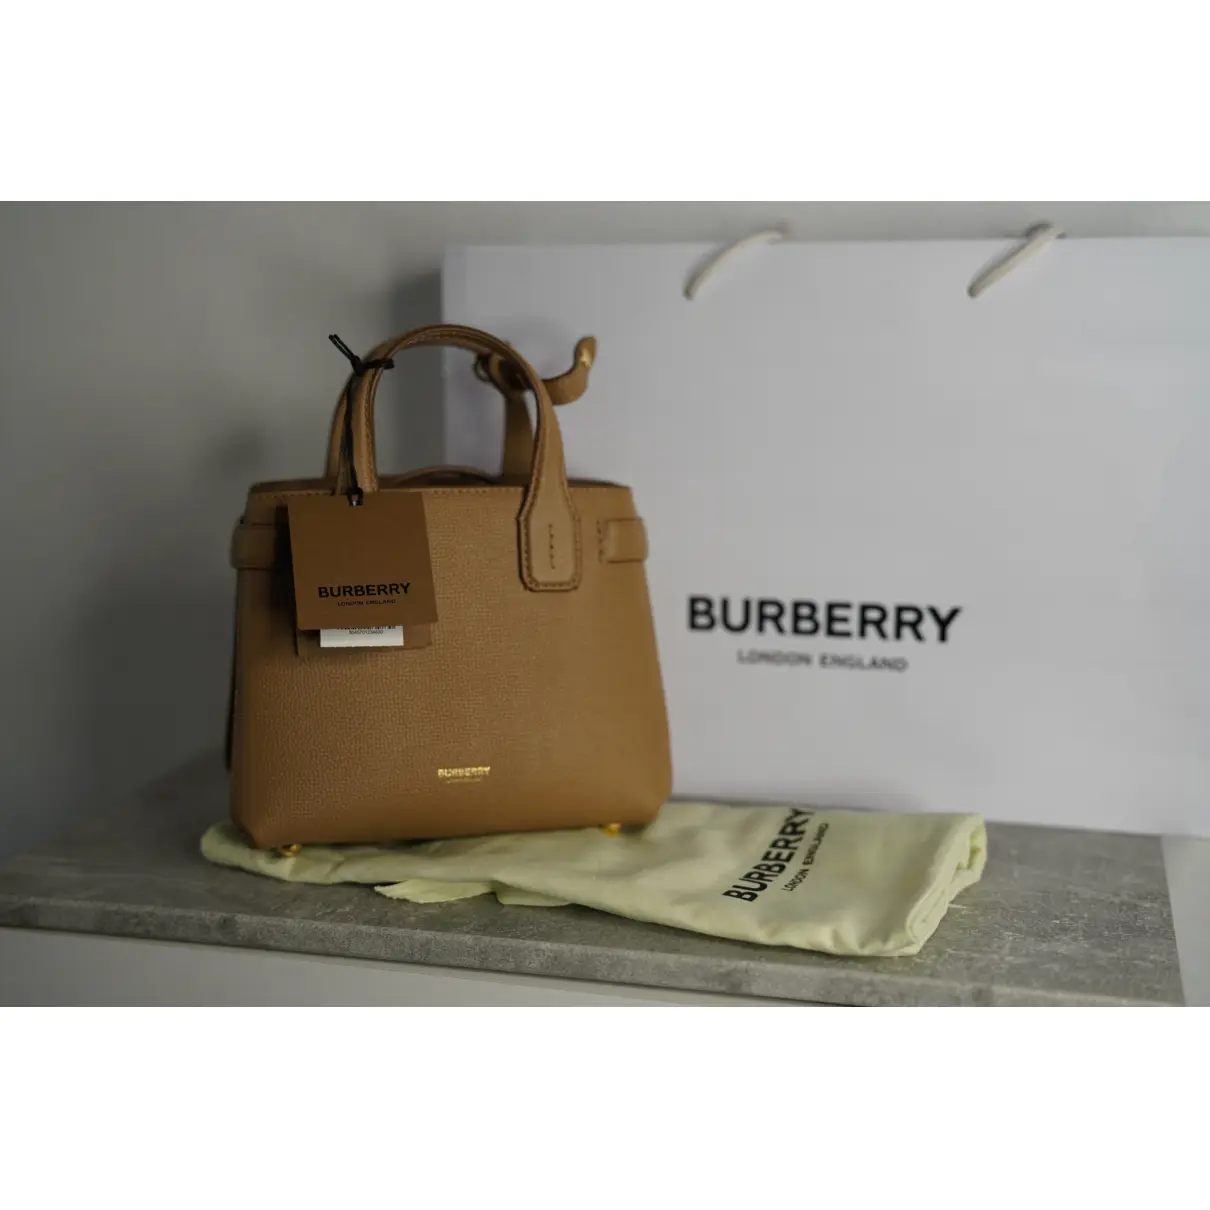 Buy Burberry The Banner leather handbag online